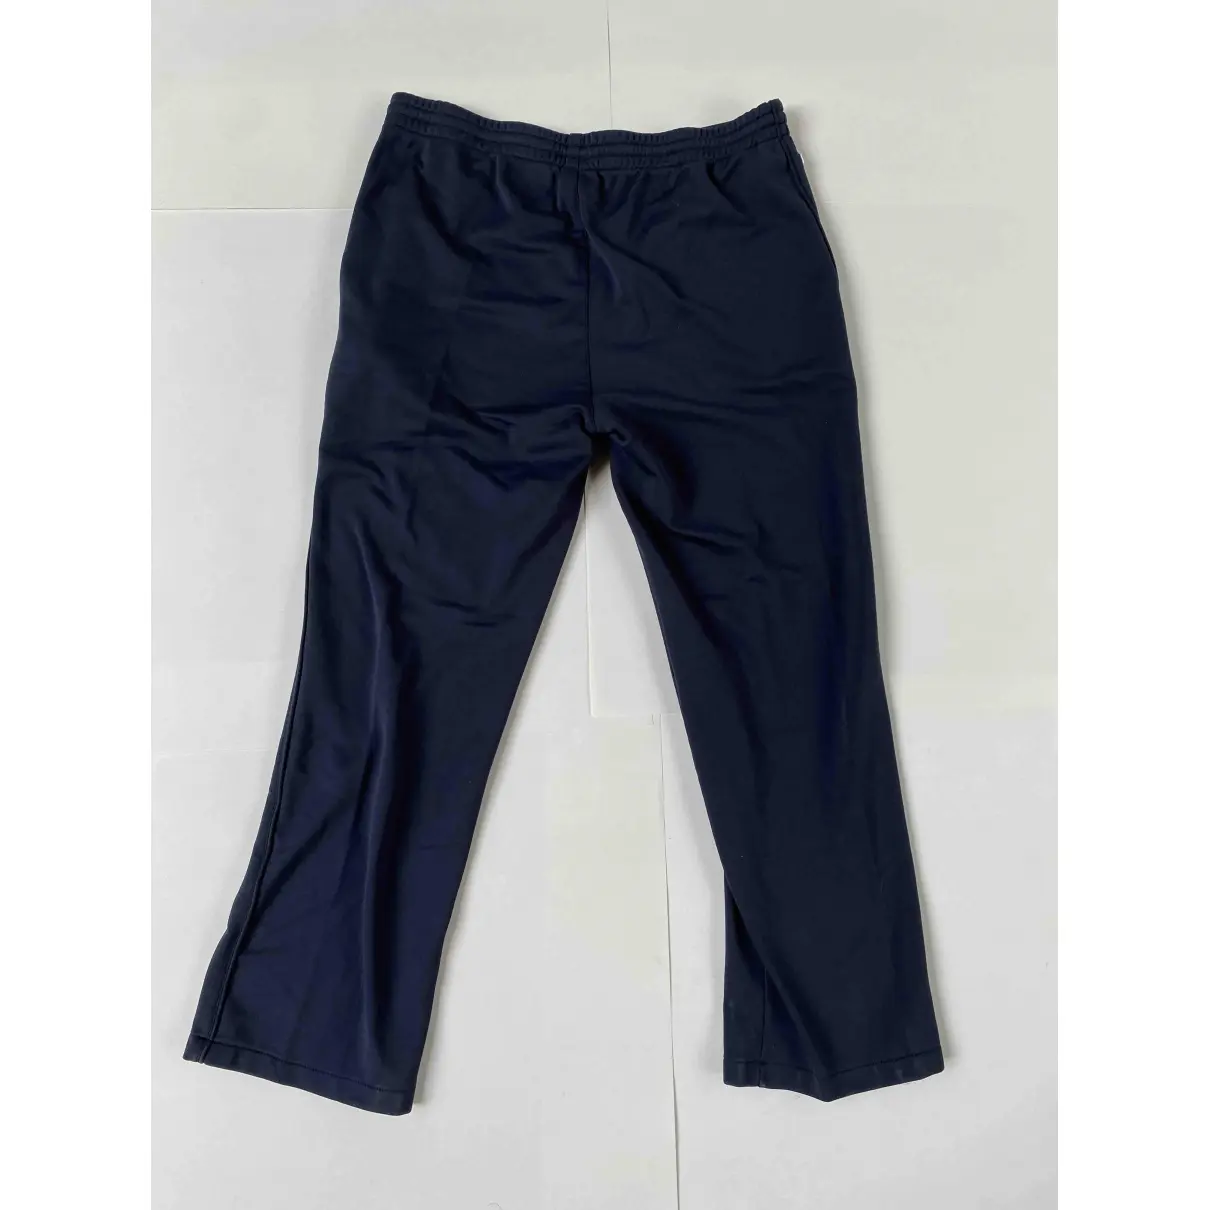 Buy Lacoste Trousers online